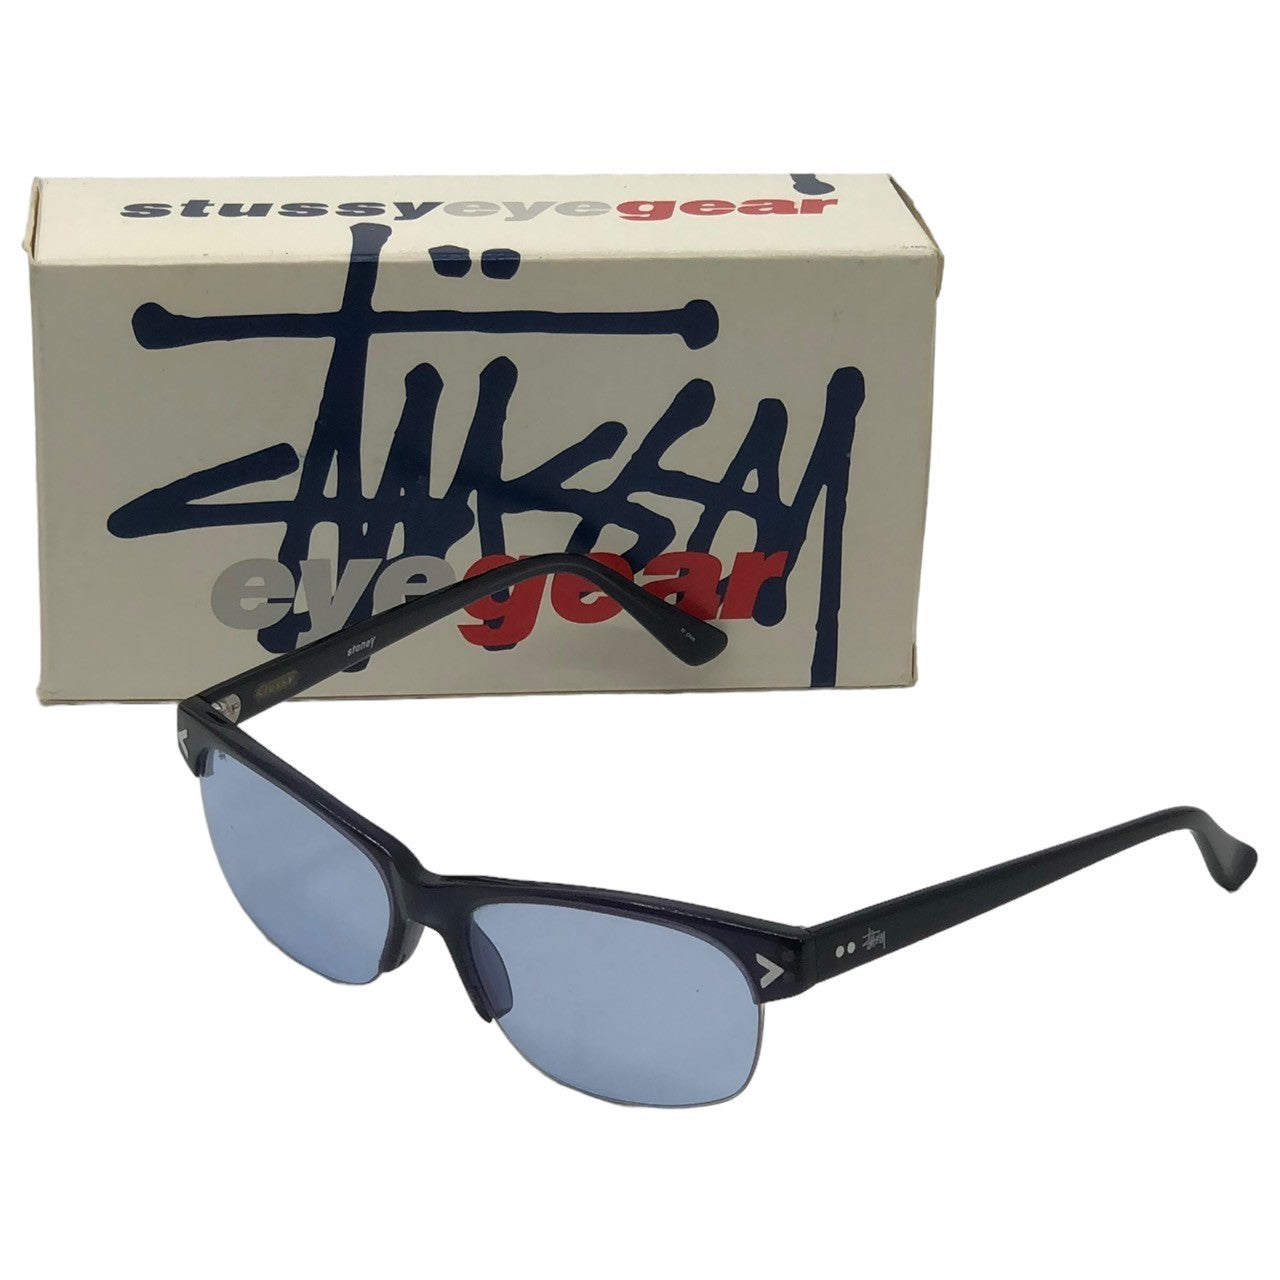 STUSSY(ステューシー) 90's "EYE GEAR" sunglasses サイド ロゴ サングラス 眼鏡 ブルーレンズ メガネ ブラック 90年代 FLORY ANTIQUE SILVER